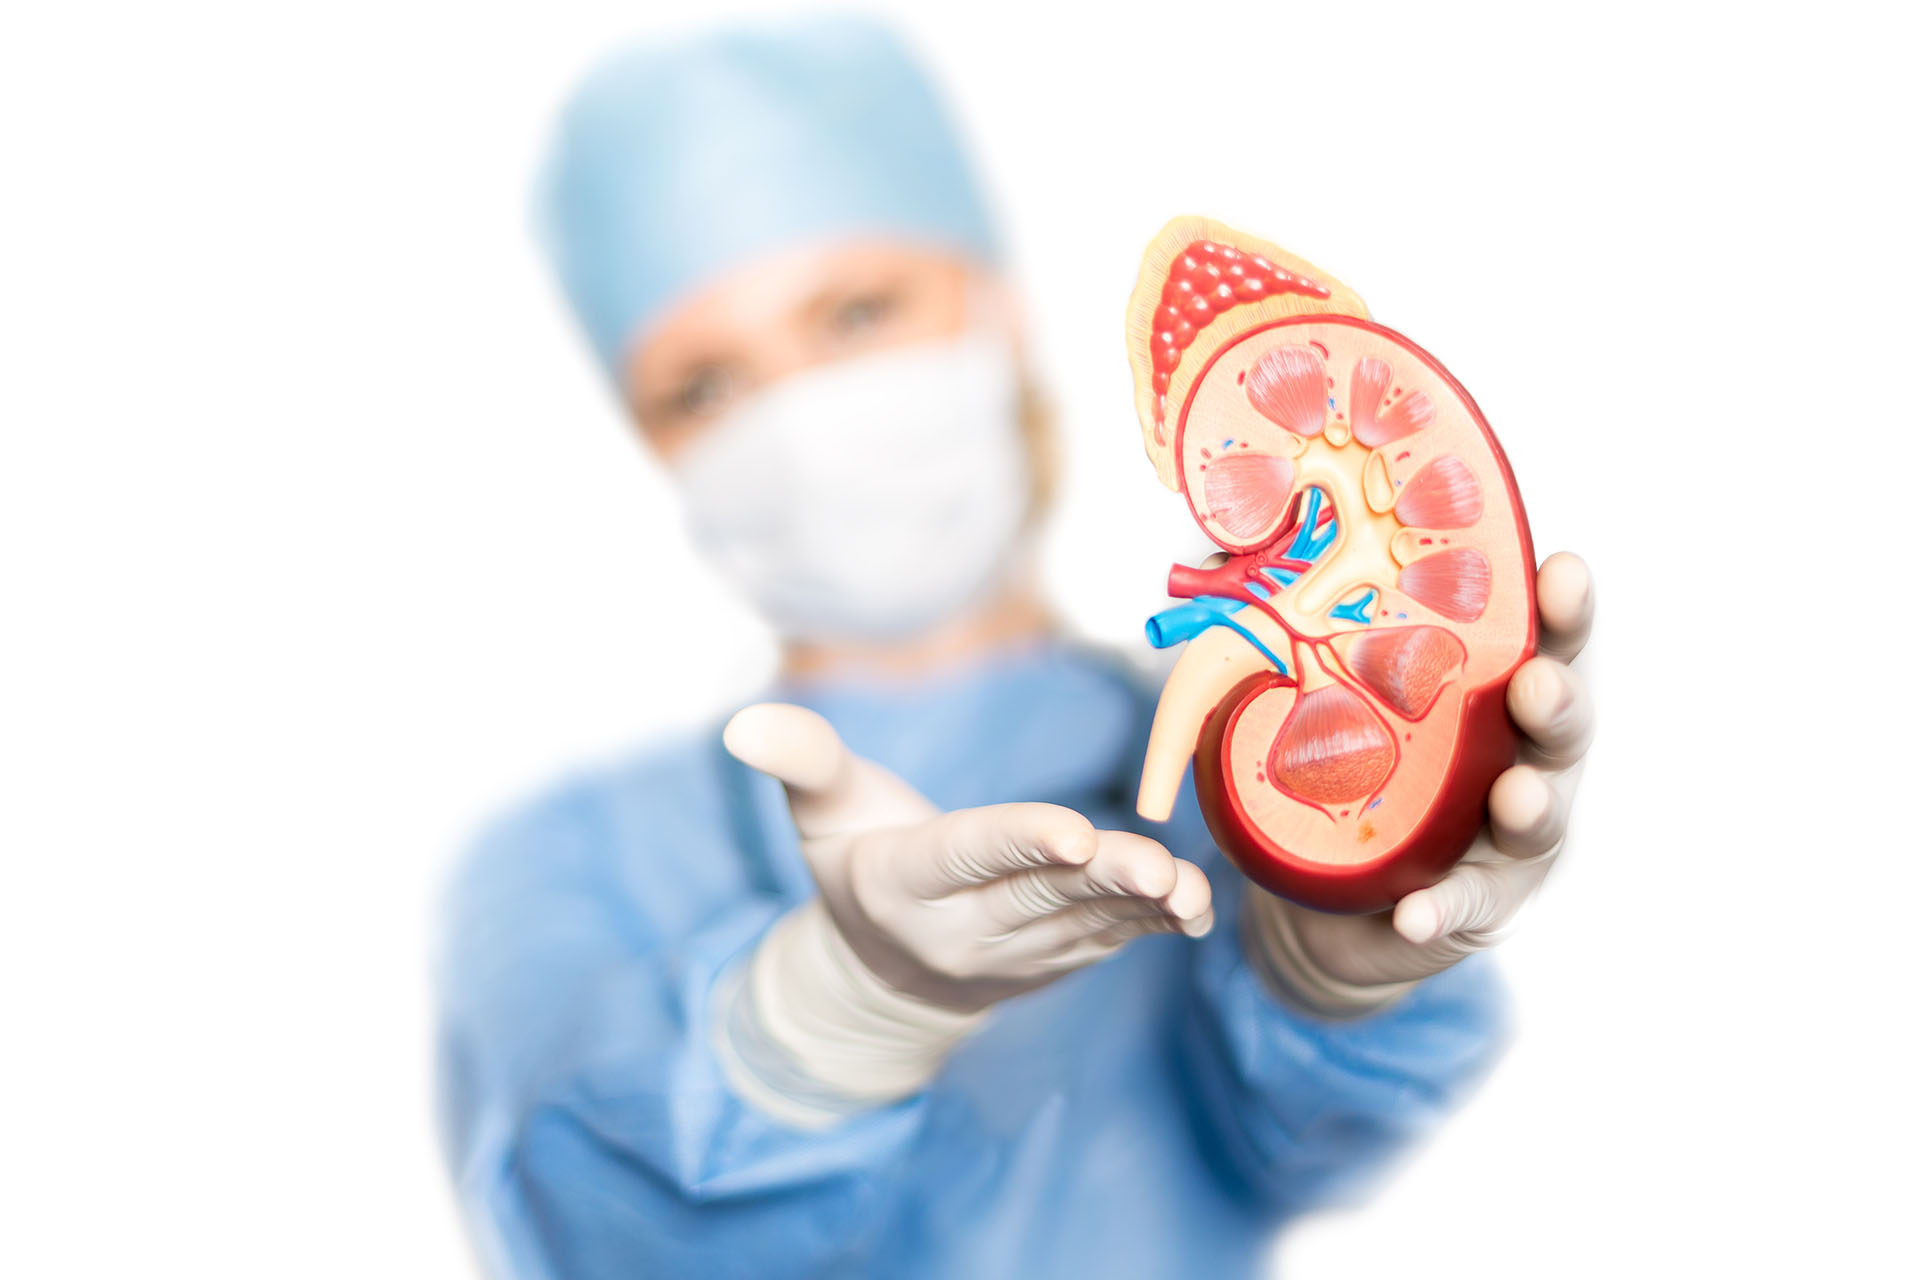 Gateway Nephrology Slider Image - Doctor presents kidney model